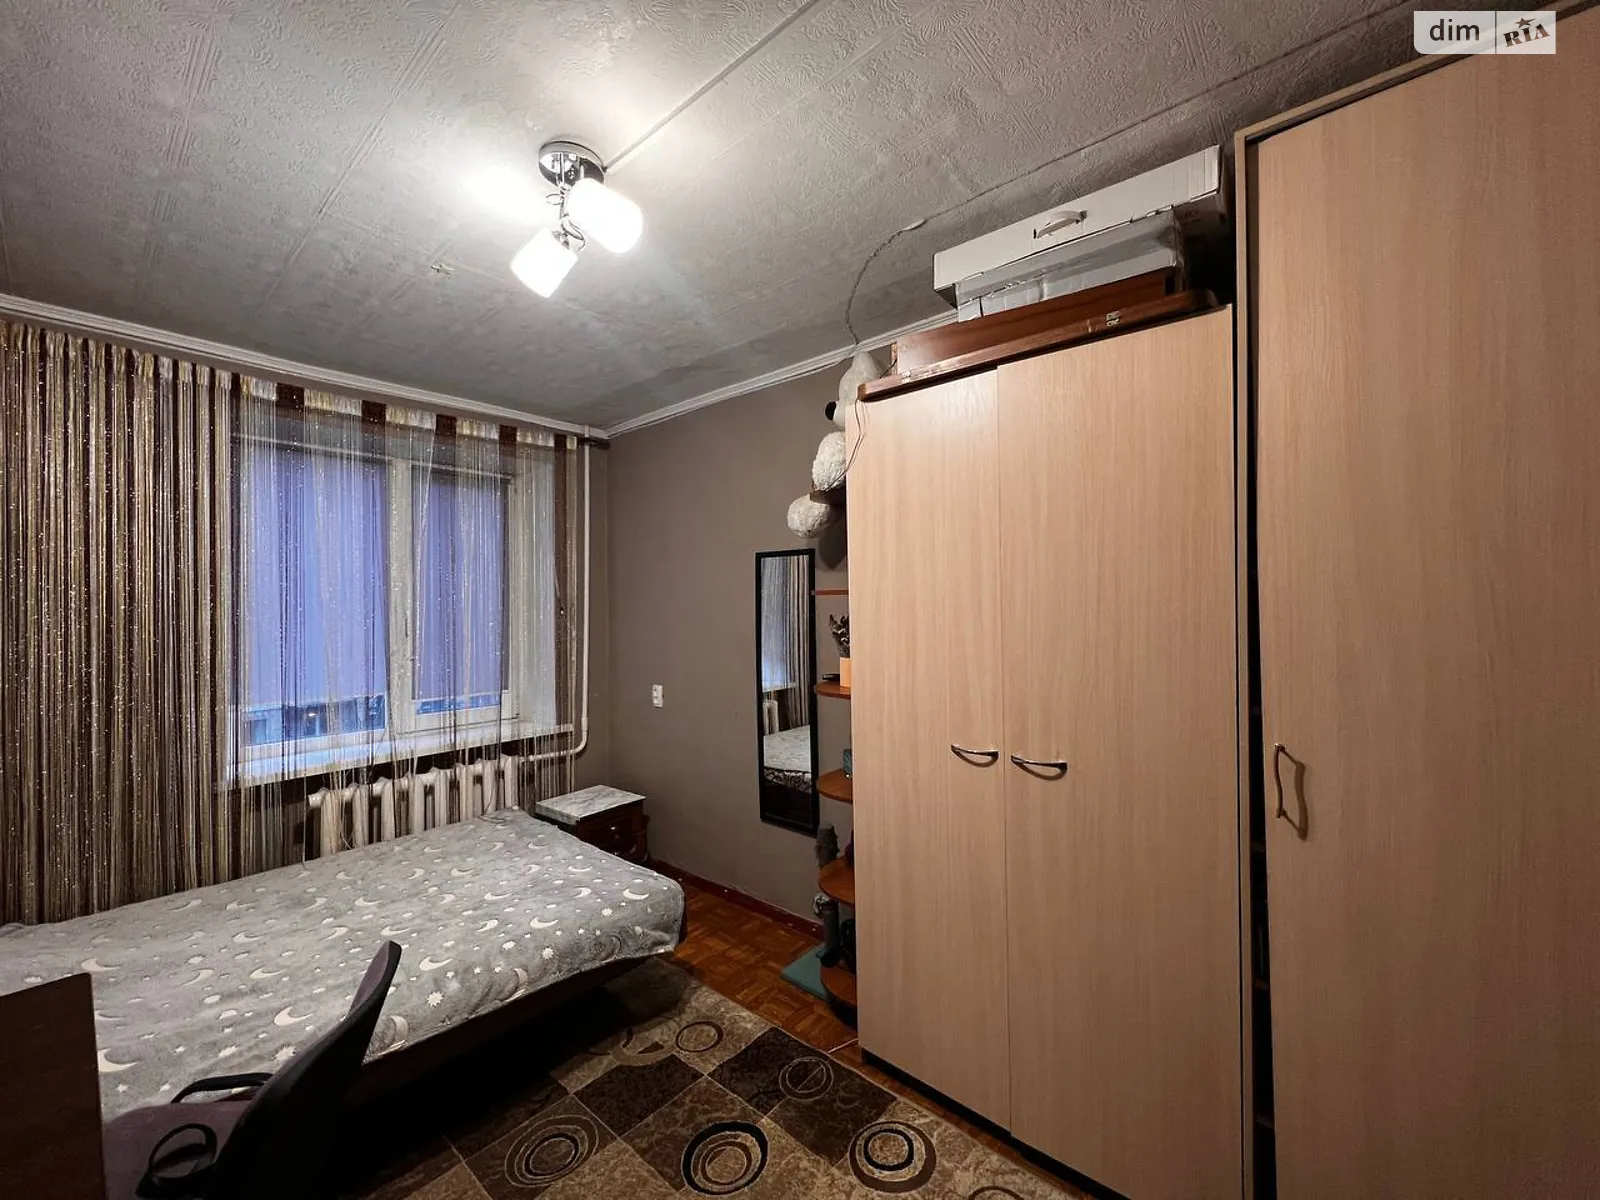 Продается комната 50 кв. м в Черкассах, цена: 21000 $